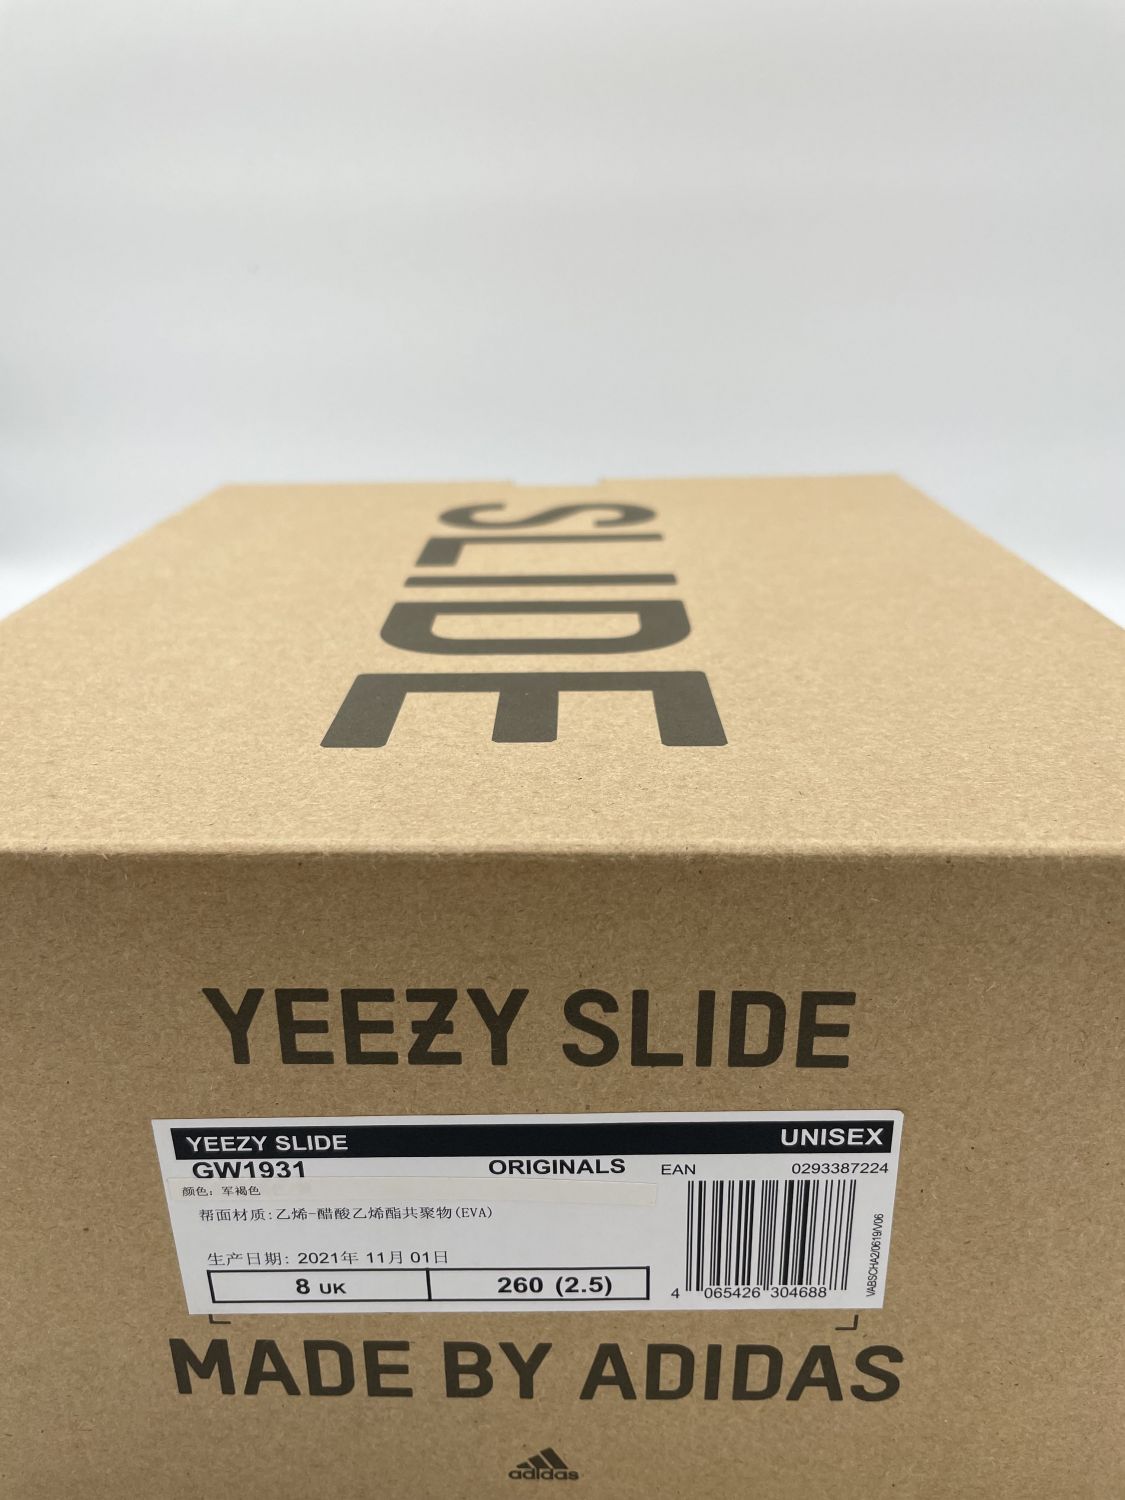 16874 - Adidas Yeezy Slide Ochre | Item Details - AfterMarket